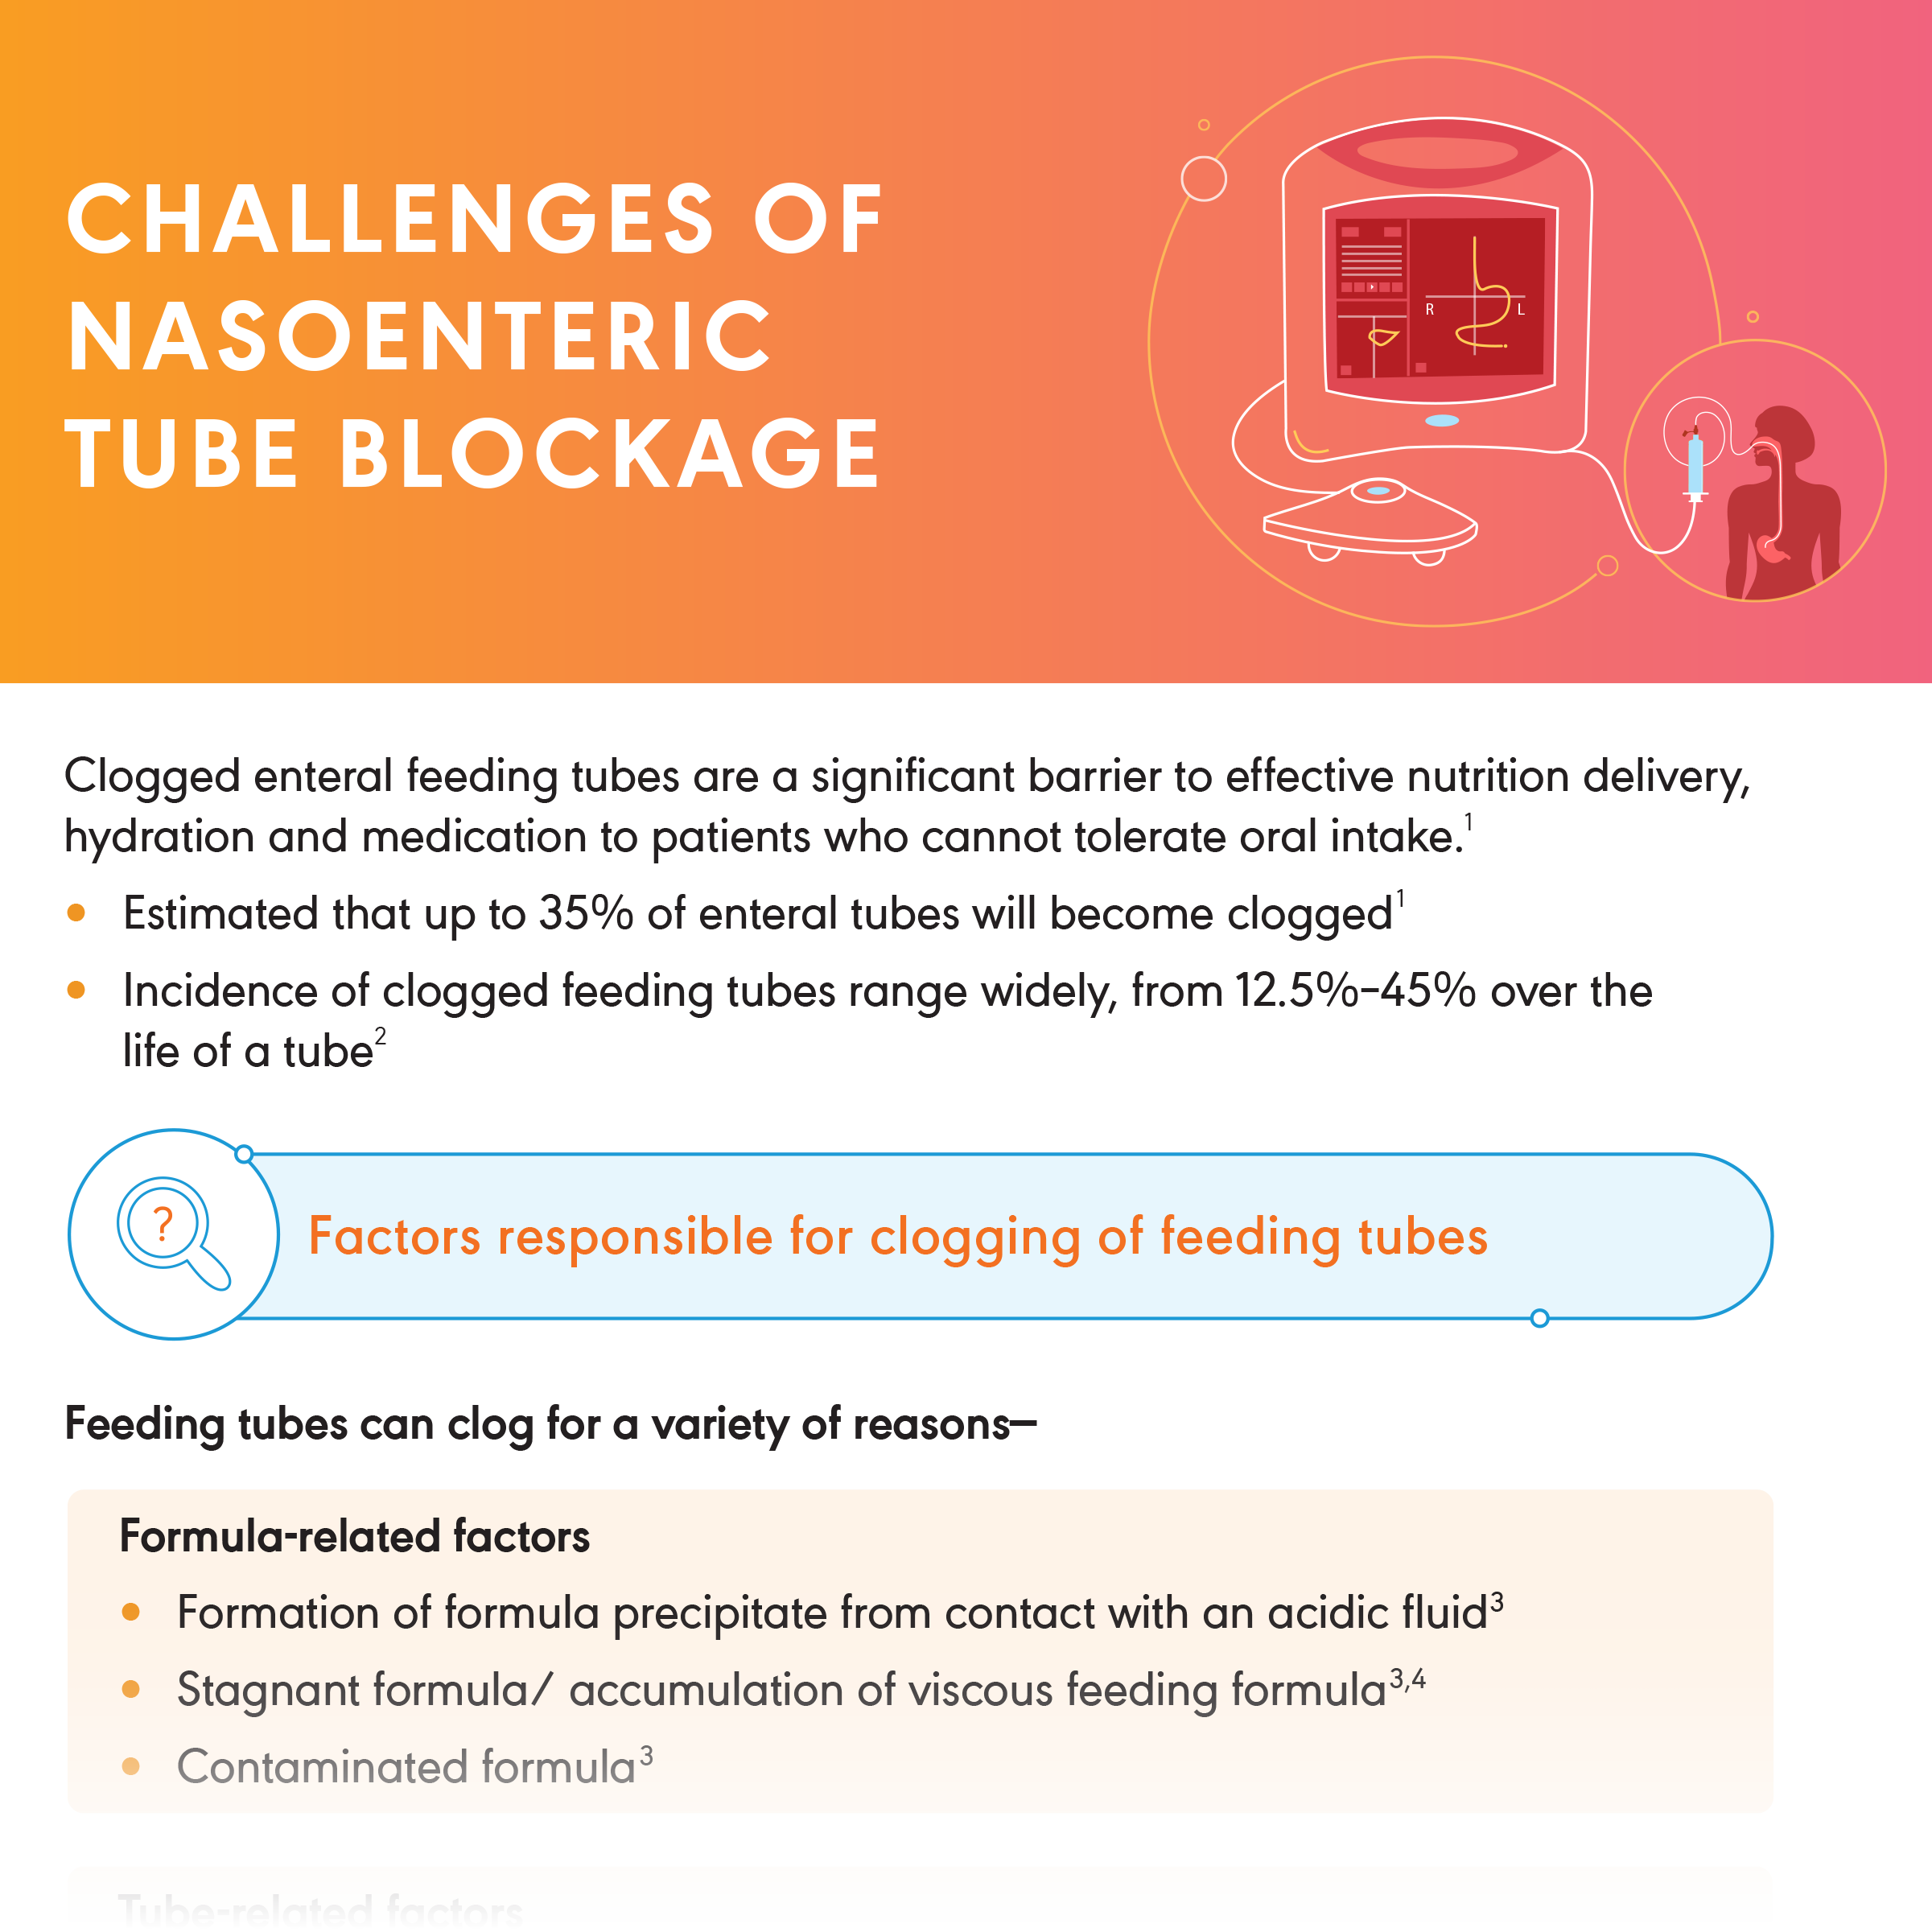 Challenges of Nasoenteric Tube Blockage